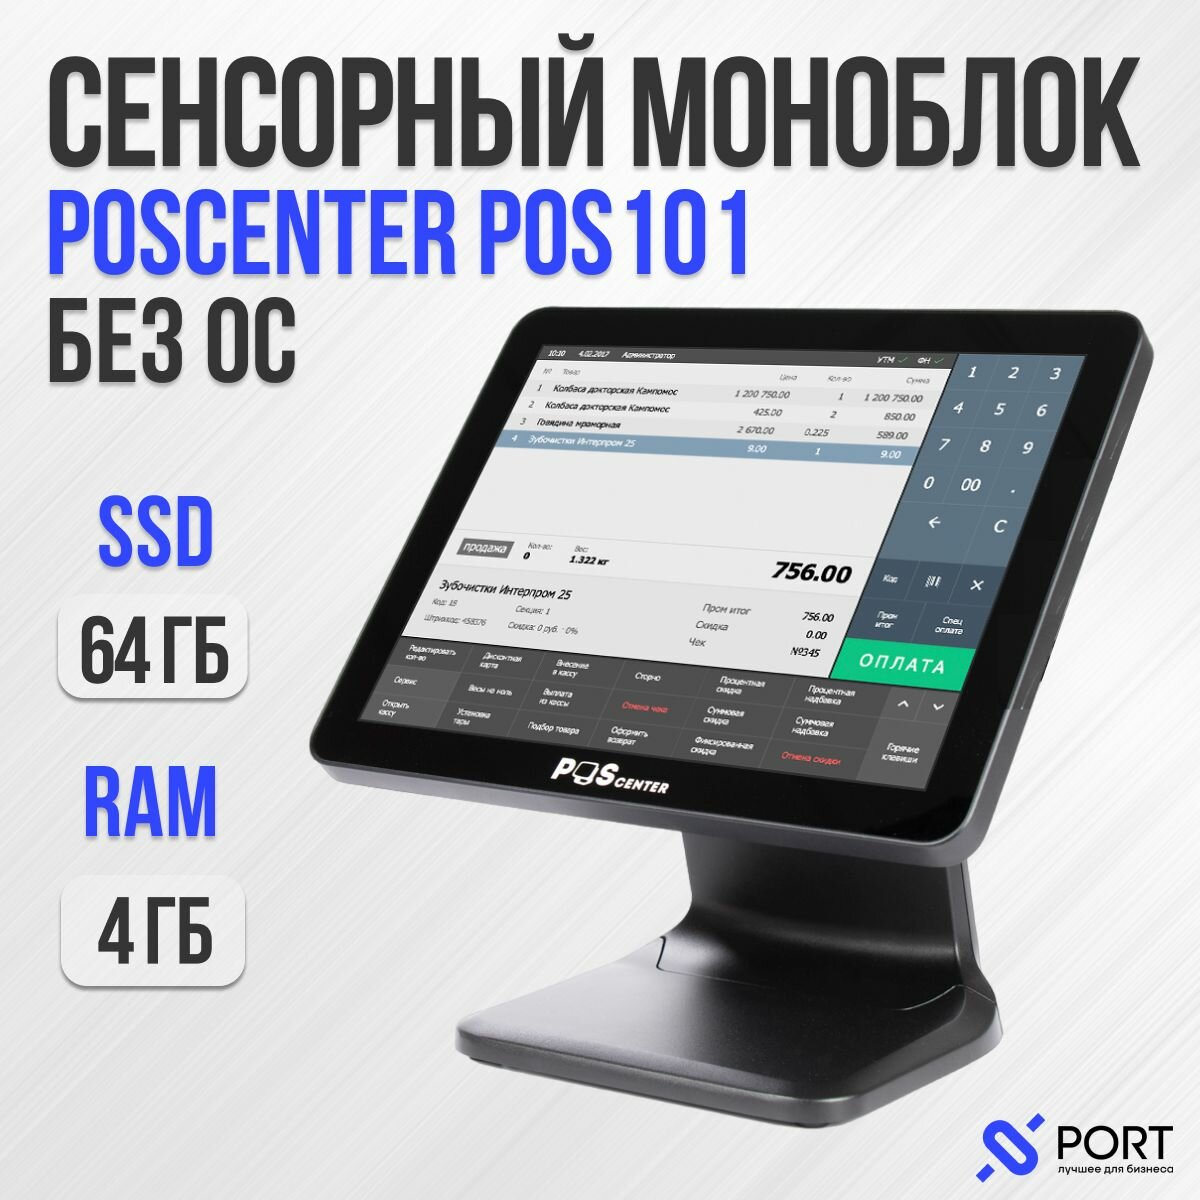 Сенсорный pos моноблок poscenter POS 101, RAM 4 Гб, SSD 64 Гб, Без ОС